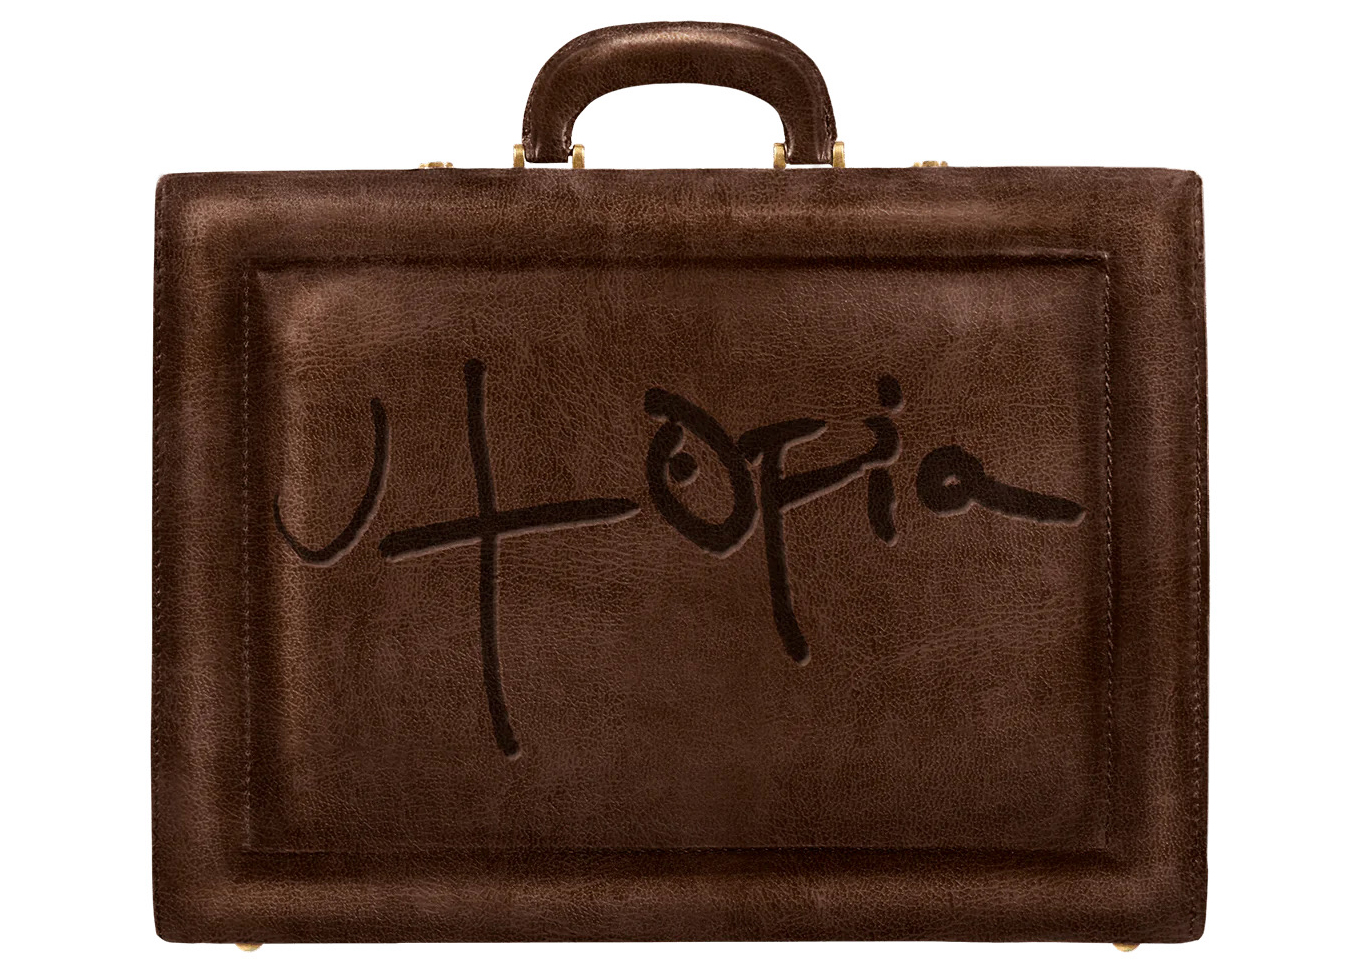 Travis seen arriving at the Louis Vuitton HQ in Paris with the utopia  briefcase : r/travisscott